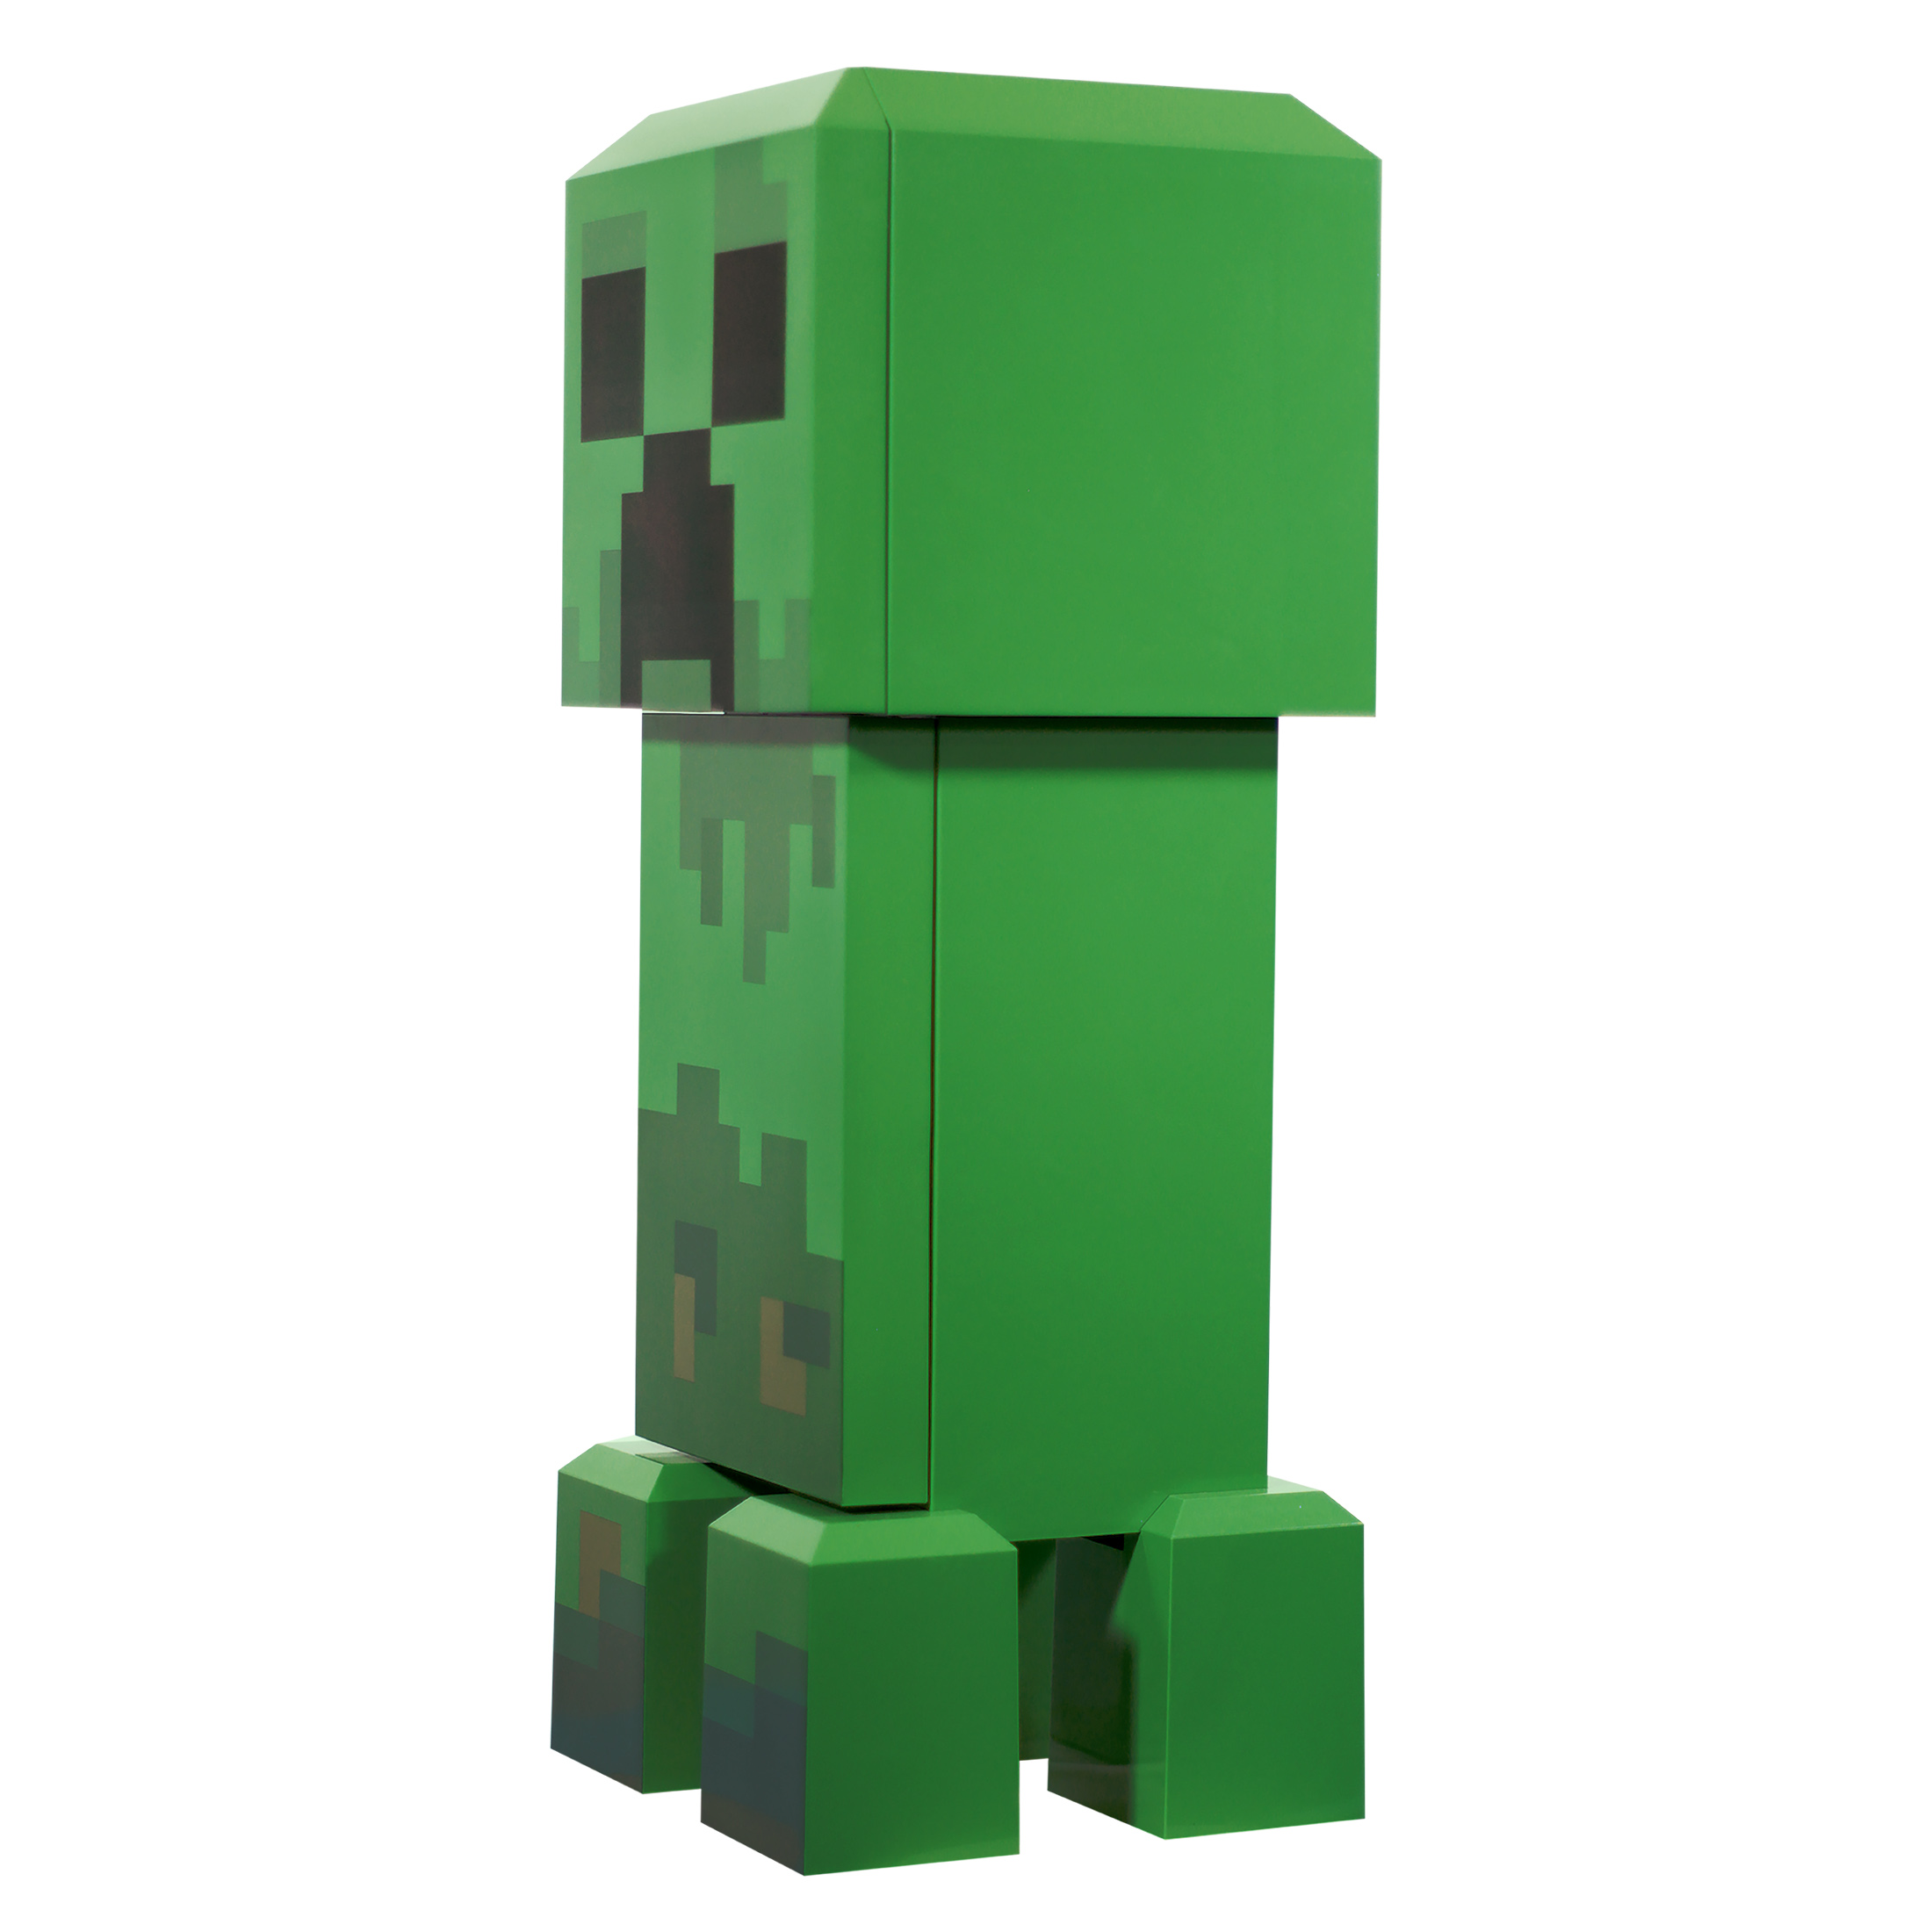 Refurbished Minecraft 18053 Green Creeper Body 12 Can Mini Fridge